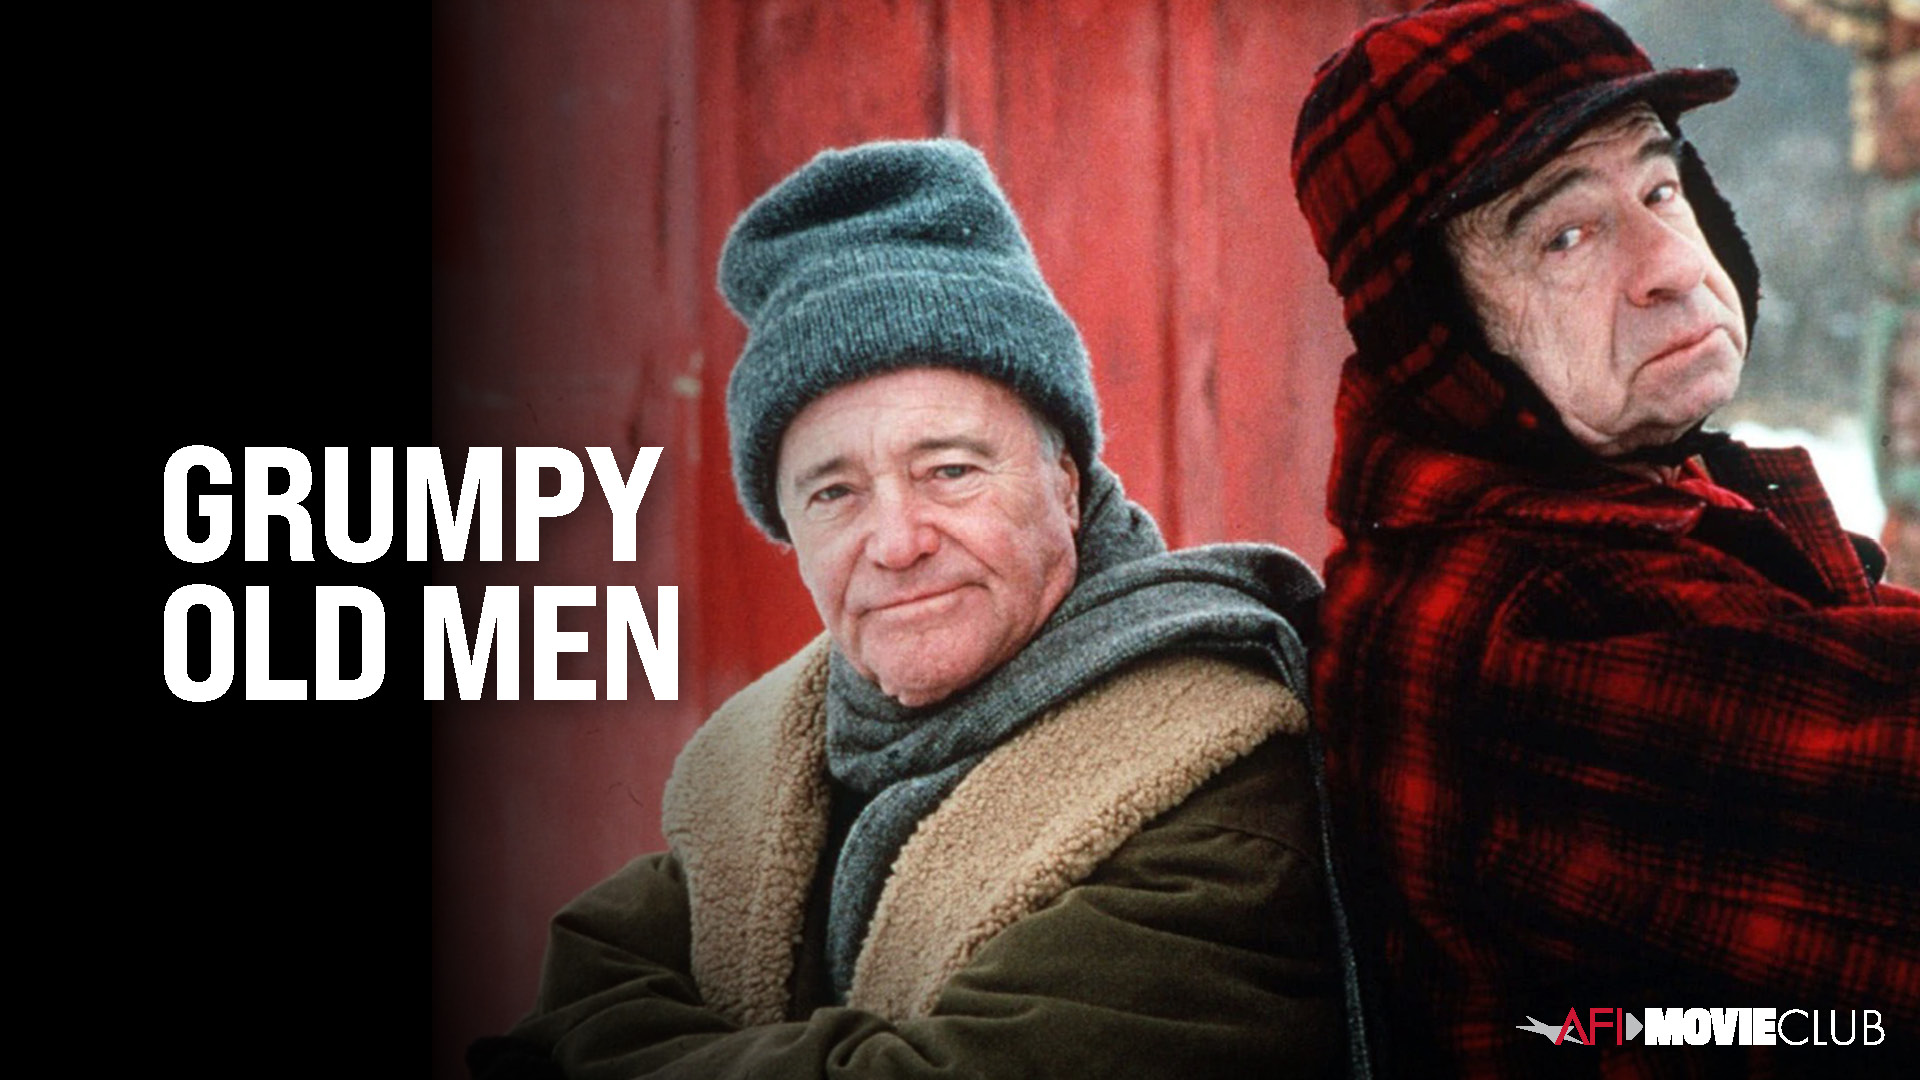 Grumpy Old Men Film Still - Jack Lemmon and Walter Matthau